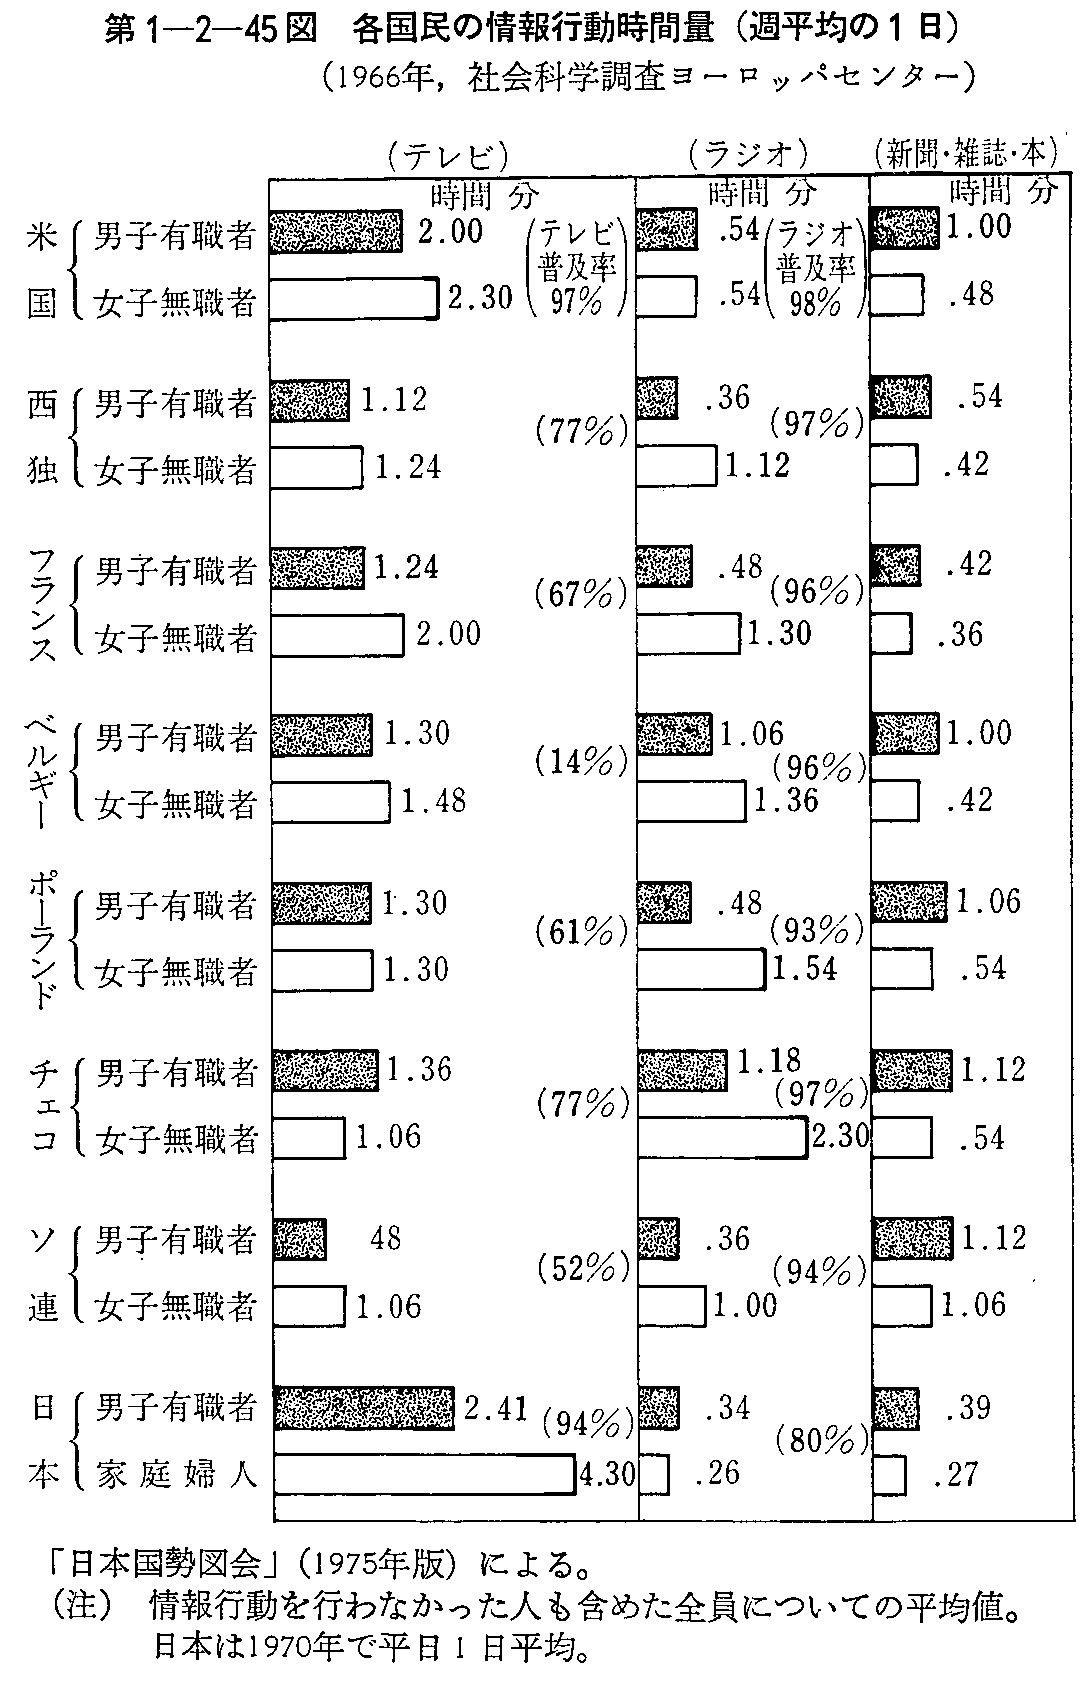 1-2-45} ȅsԗ(Tς1) (1966N,ЉȊw[bpZ^[)